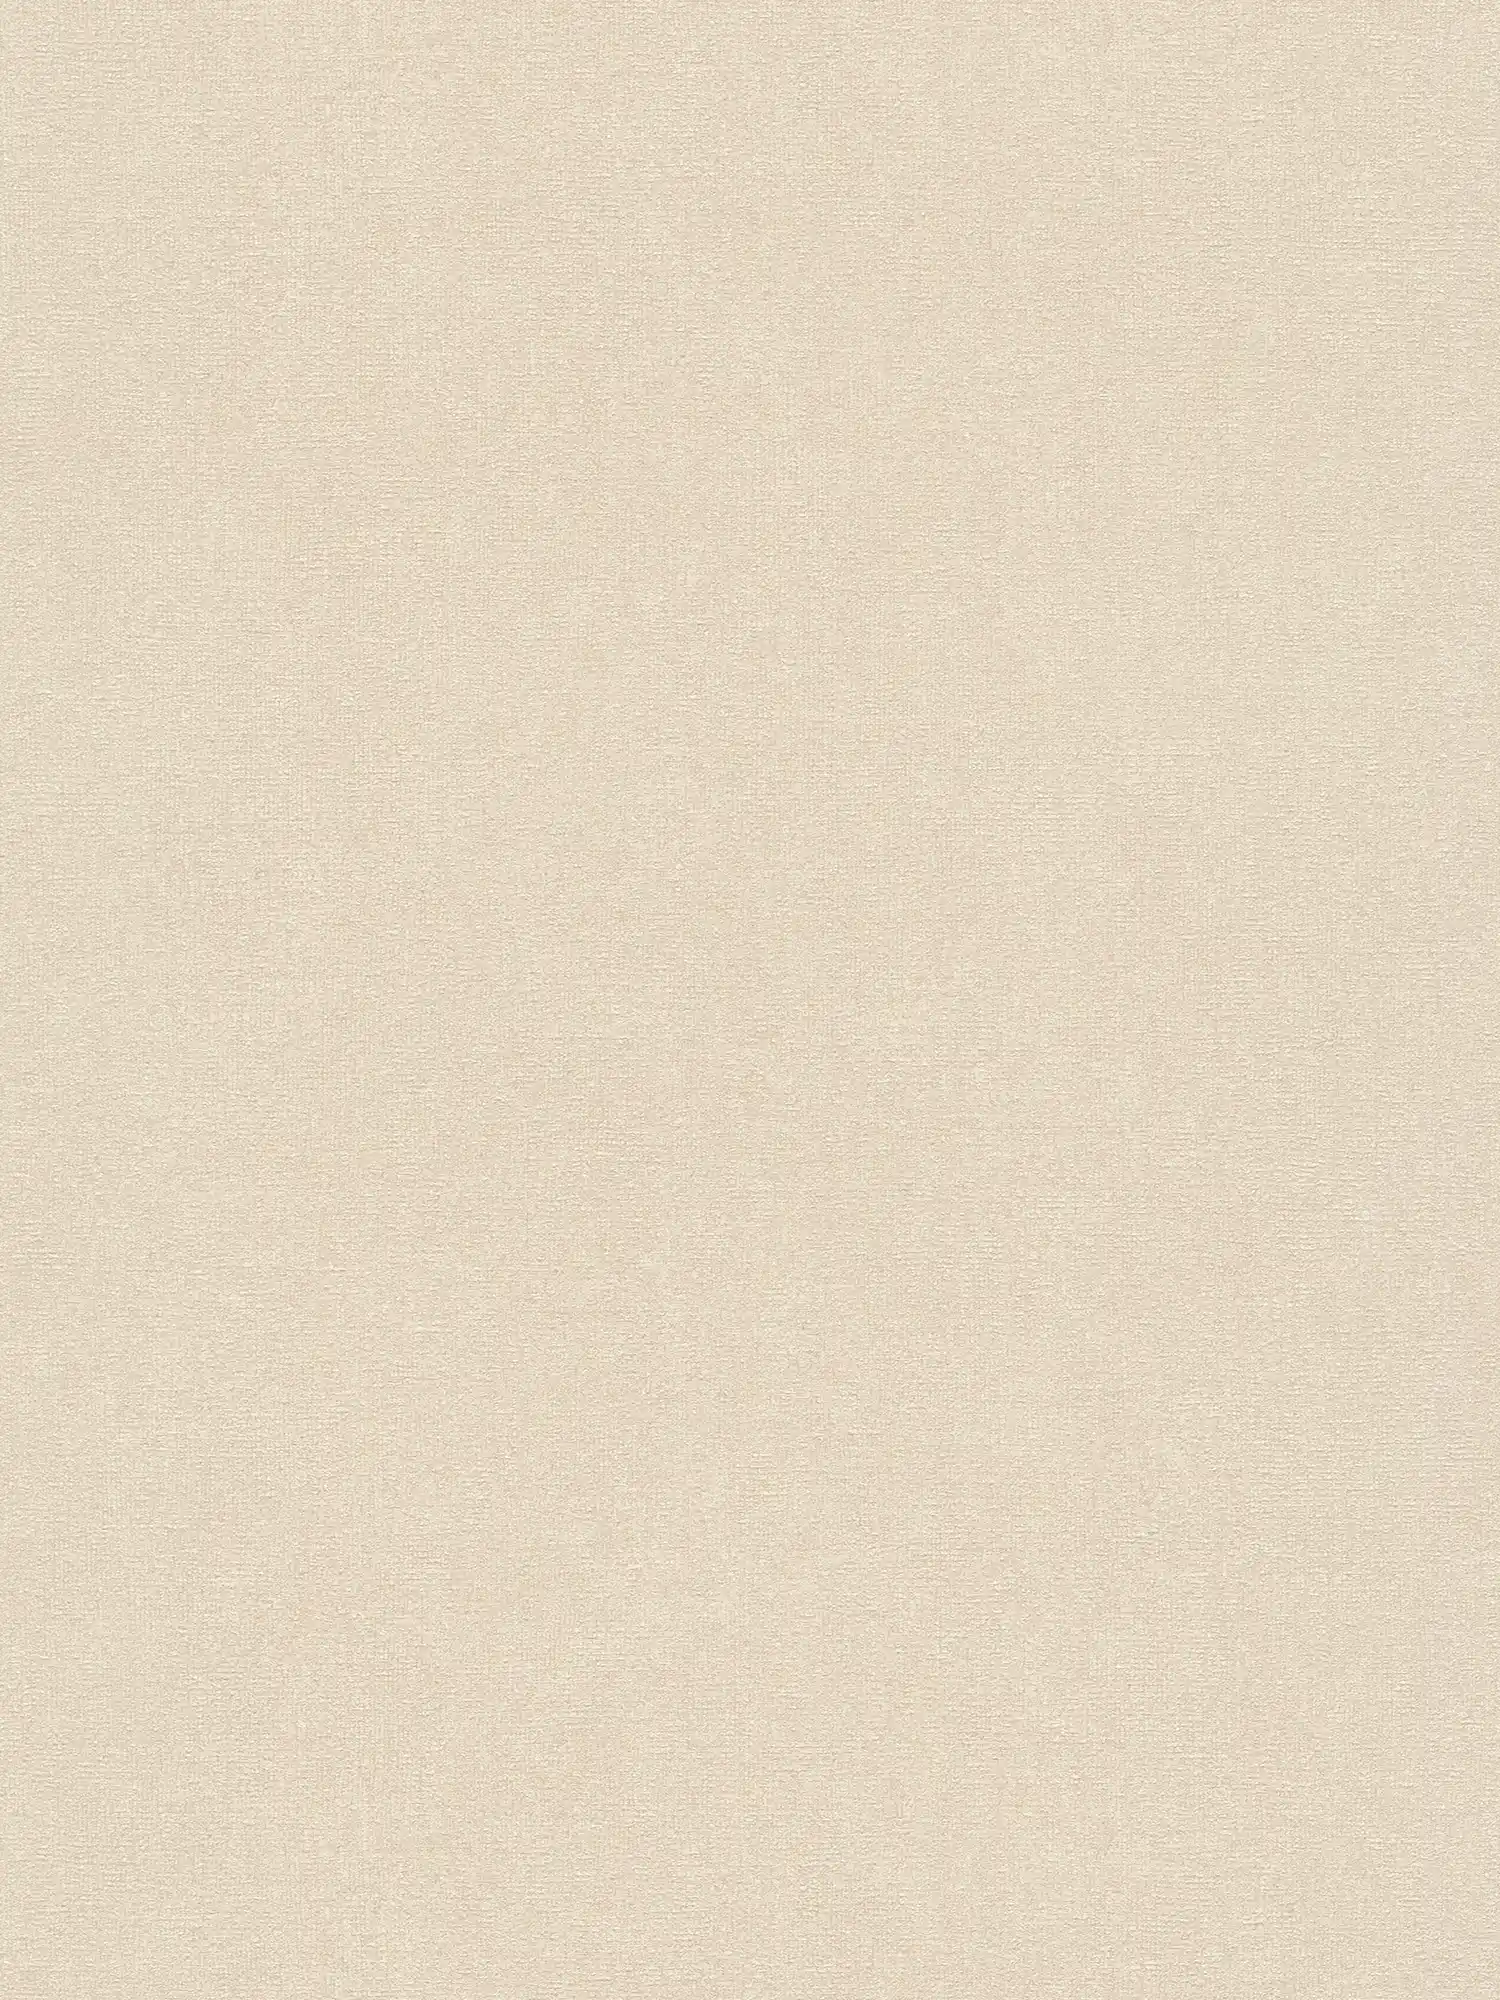         Non-woven wallpaper plains with fine structure - cream, beige
    